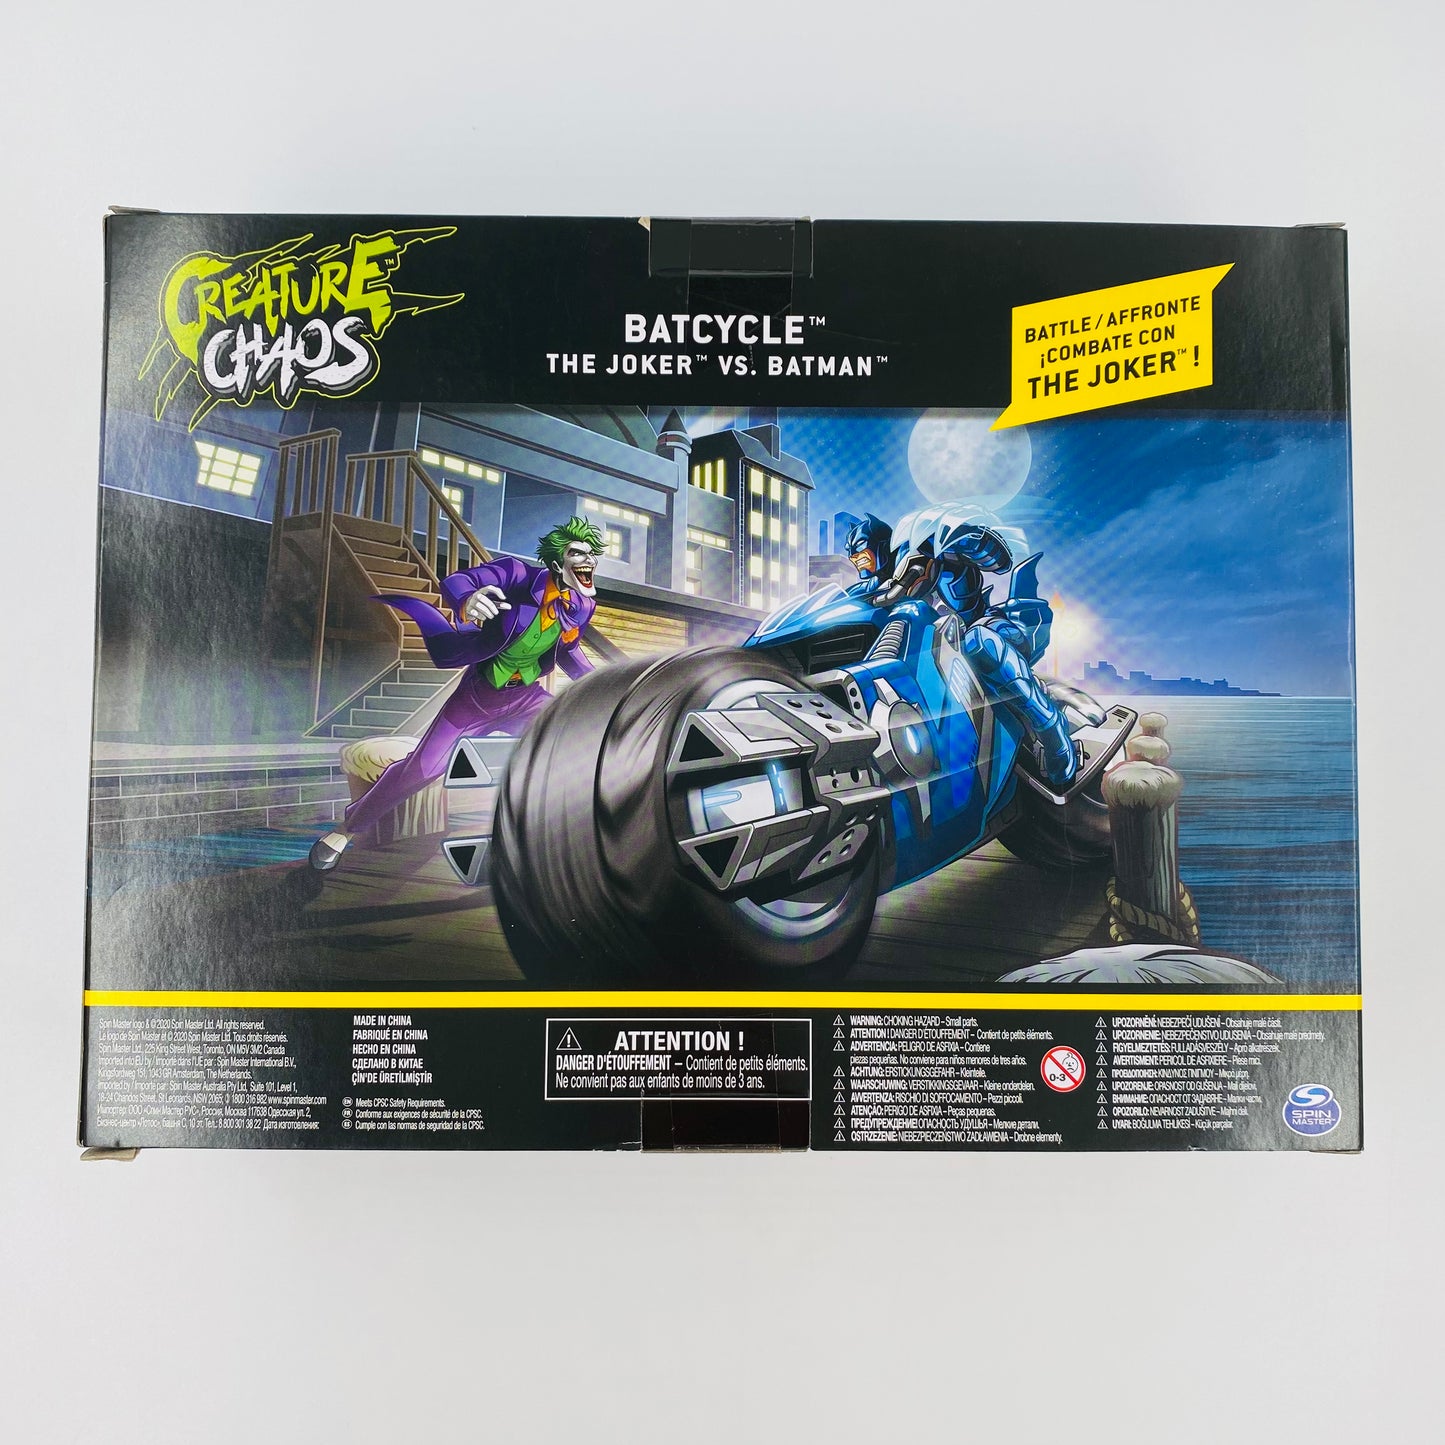 Batman The Caped Crusader Creature Chaos Batcycle, The Joker VS Batman boxed vehicle & 4” action figures (2021) Spin Master